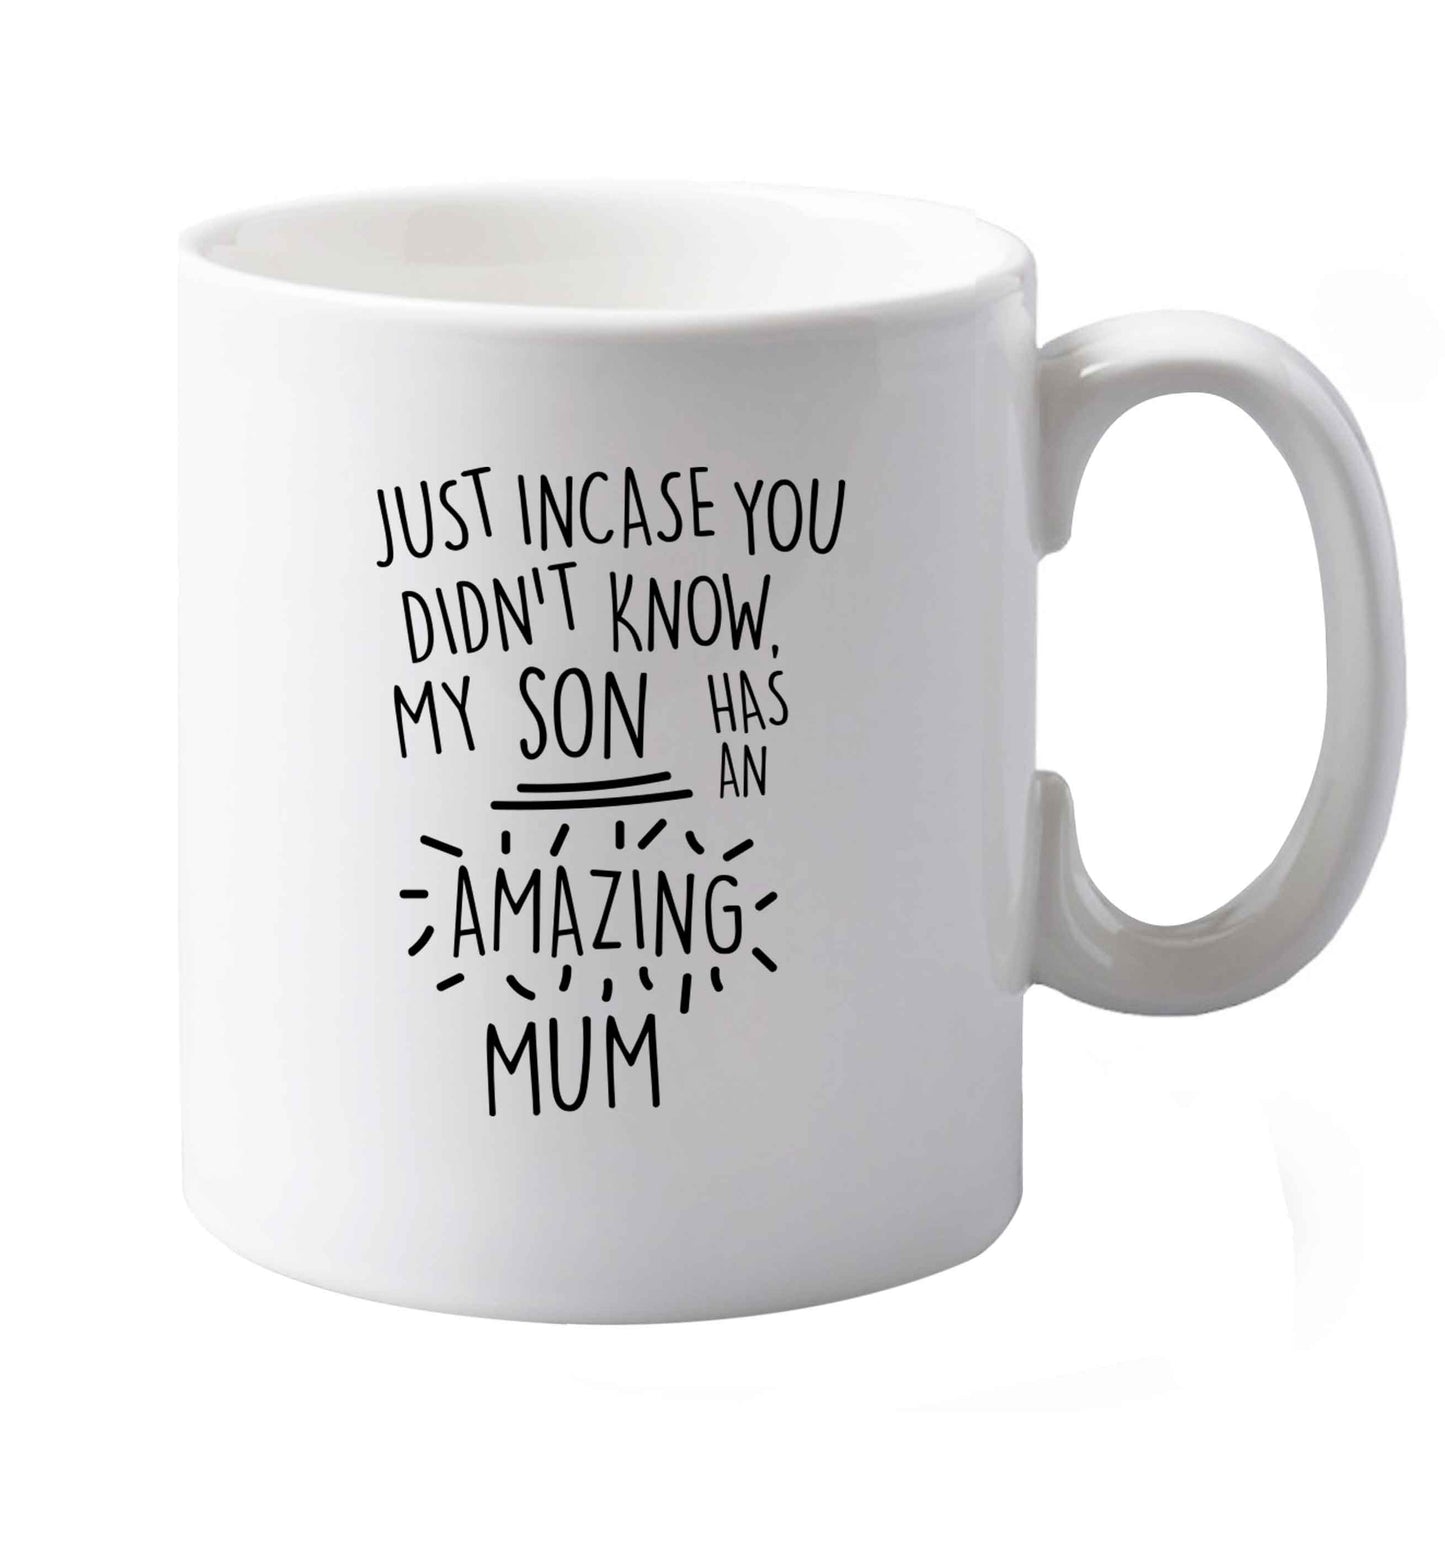 10 oz Just incase you didn't know my son has an amazing mum ceramic mug both sides